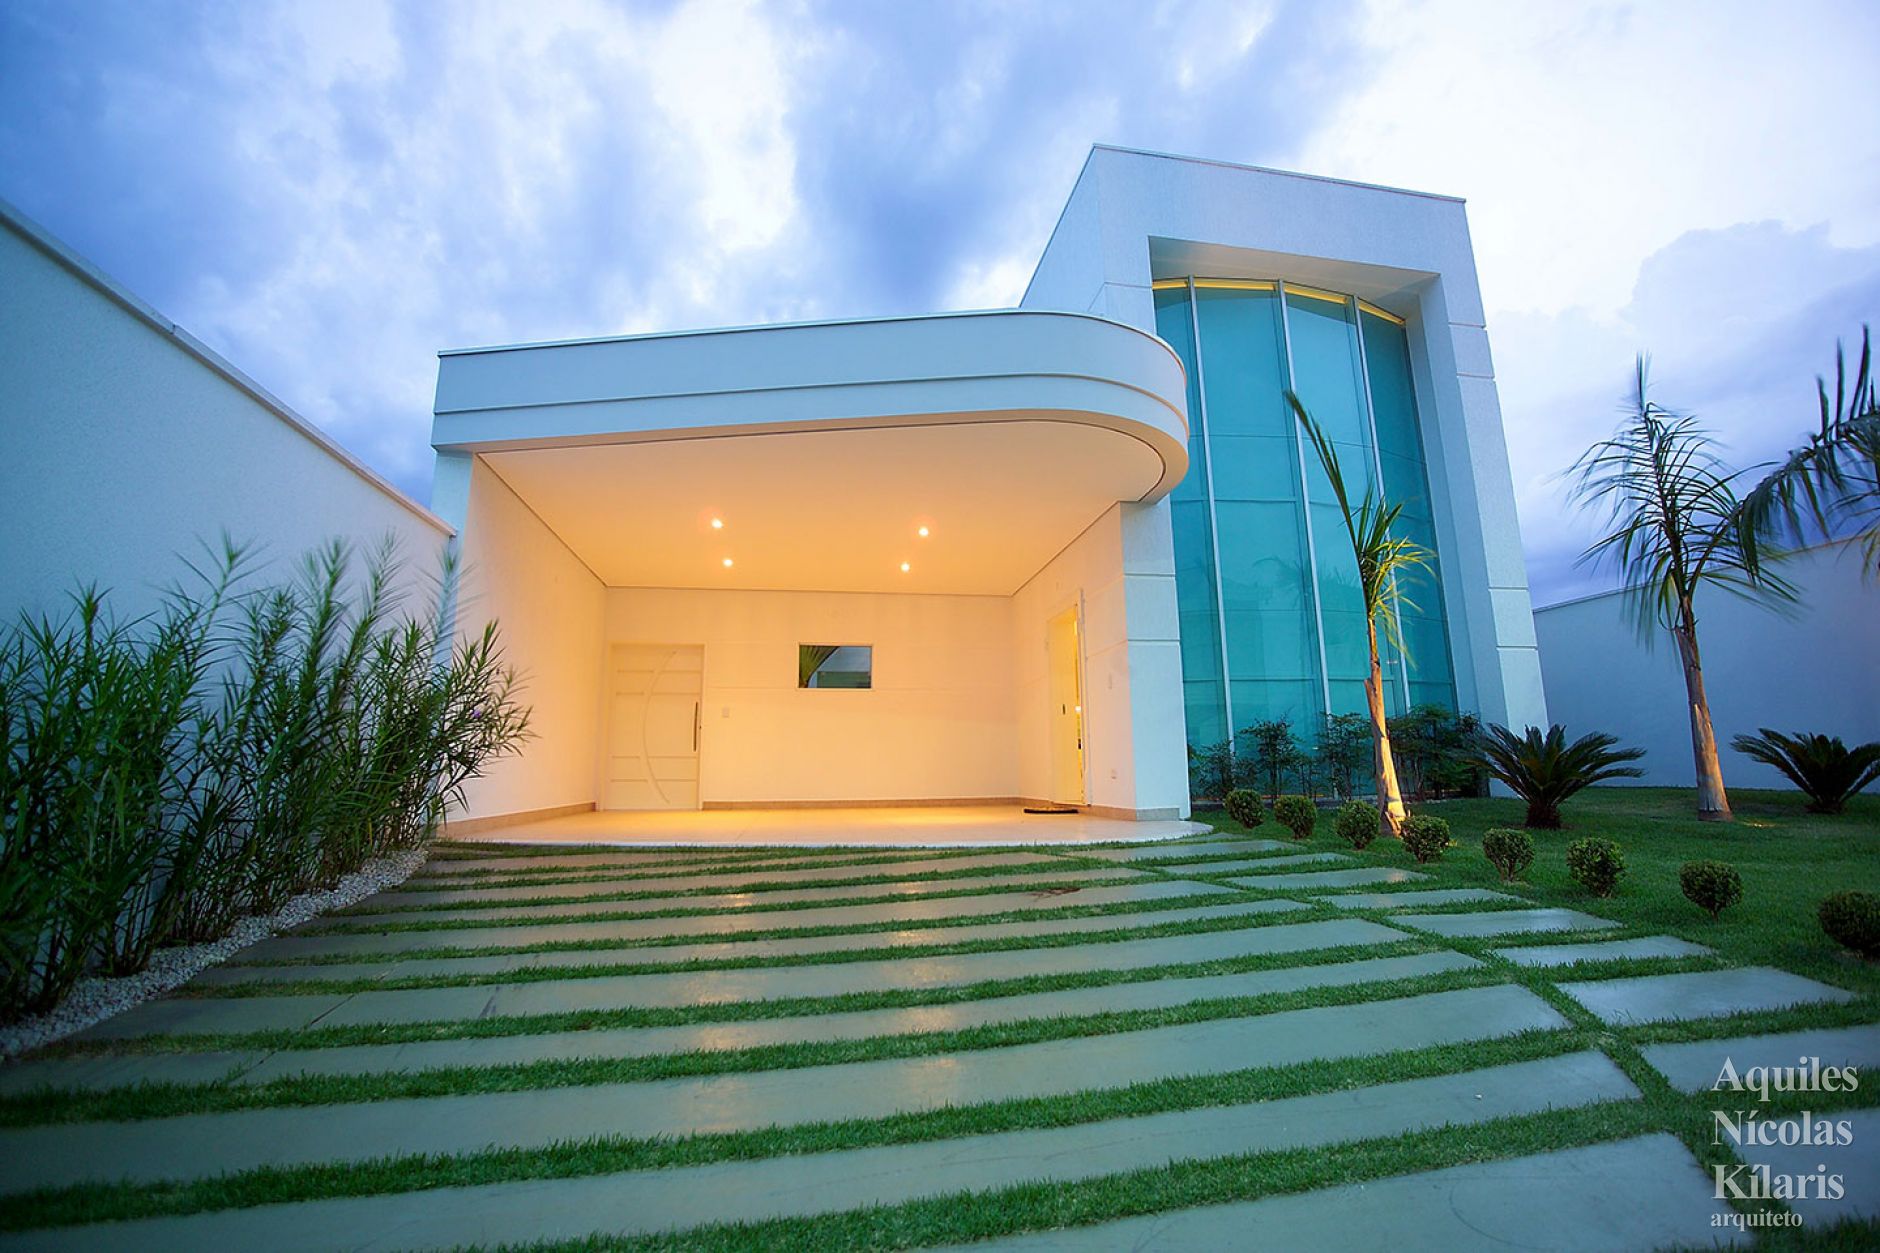 Arquiteto - Aquiles Nícolas Kílaris - Residential Projects - Loft House